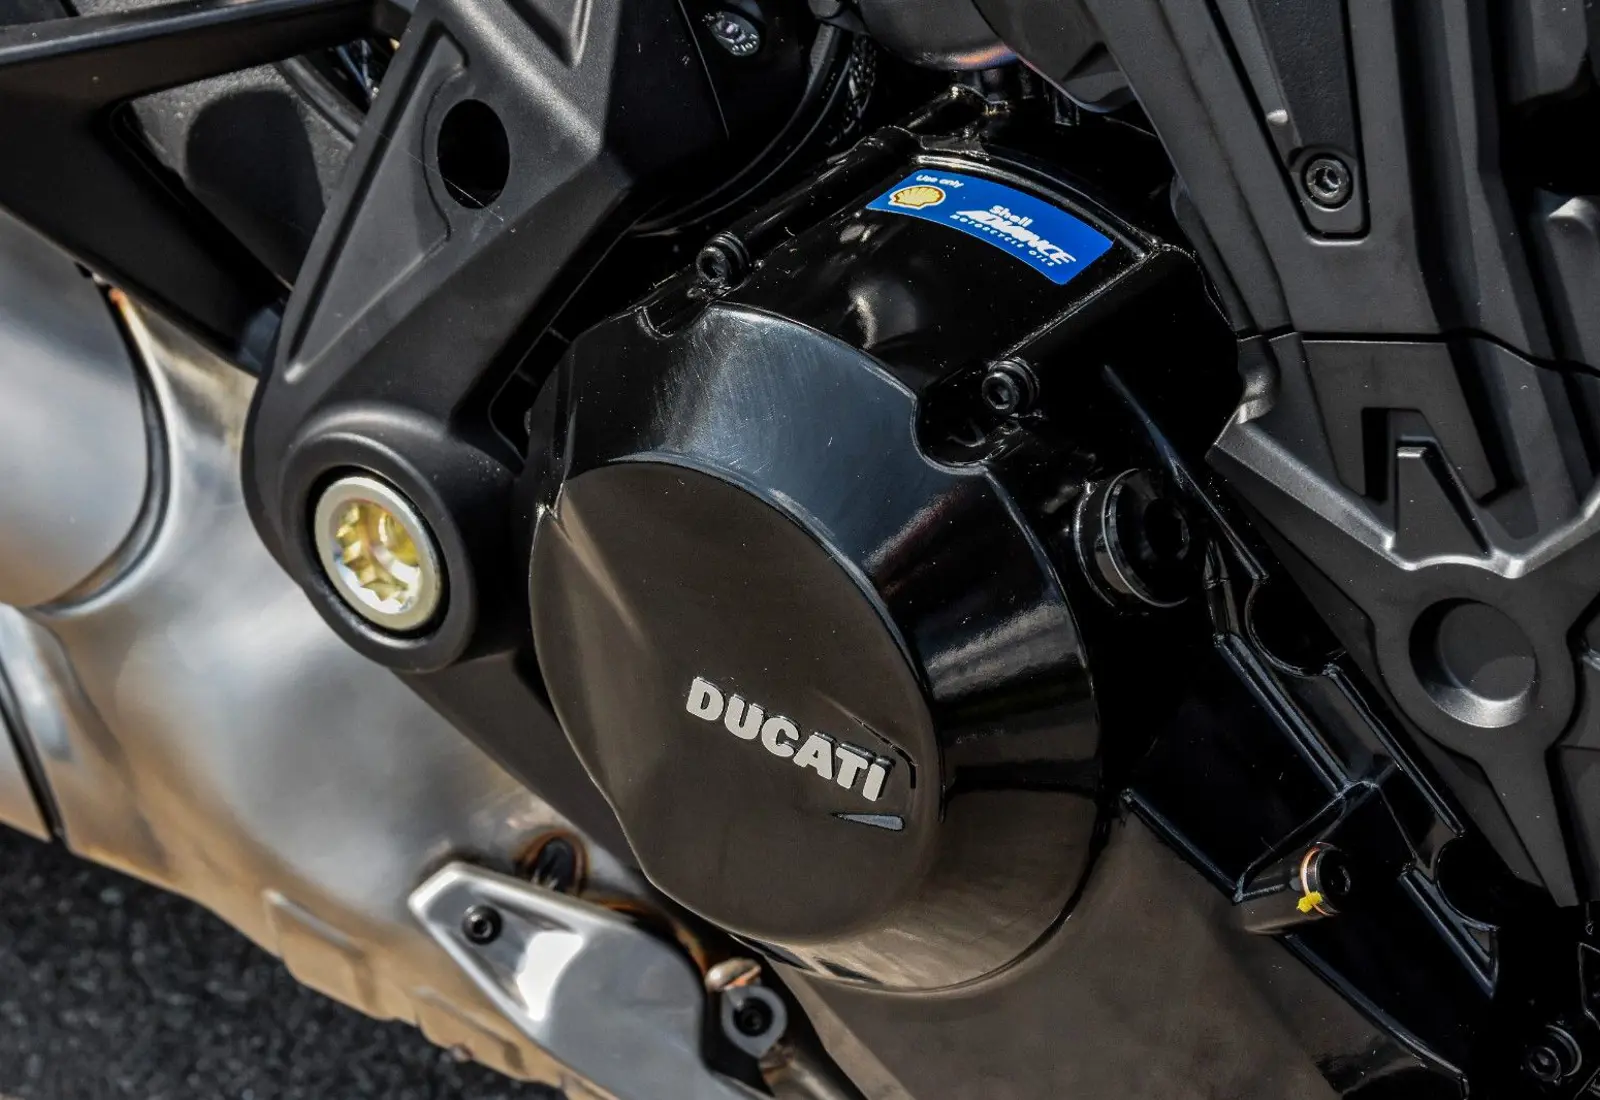 Ducati X-Diavel Nera * POLTRONA FRAU * 1 OF 500 * LIMITED ED - 41970